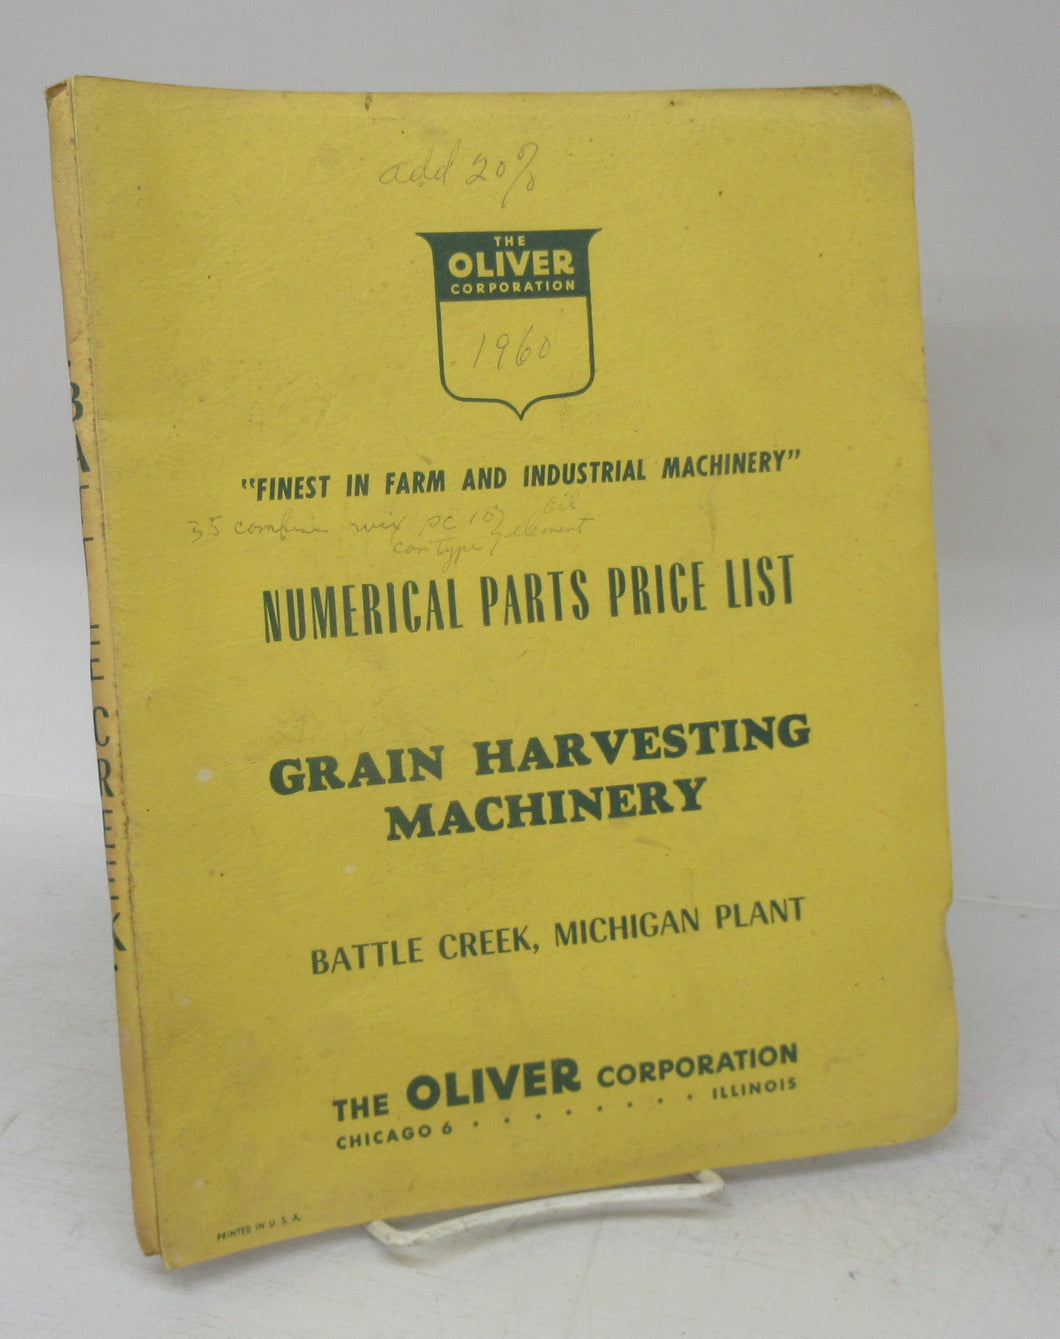 Numerical Parts Price List, Grain Harvesting Machinery, Battle Creek, Michigan Plant